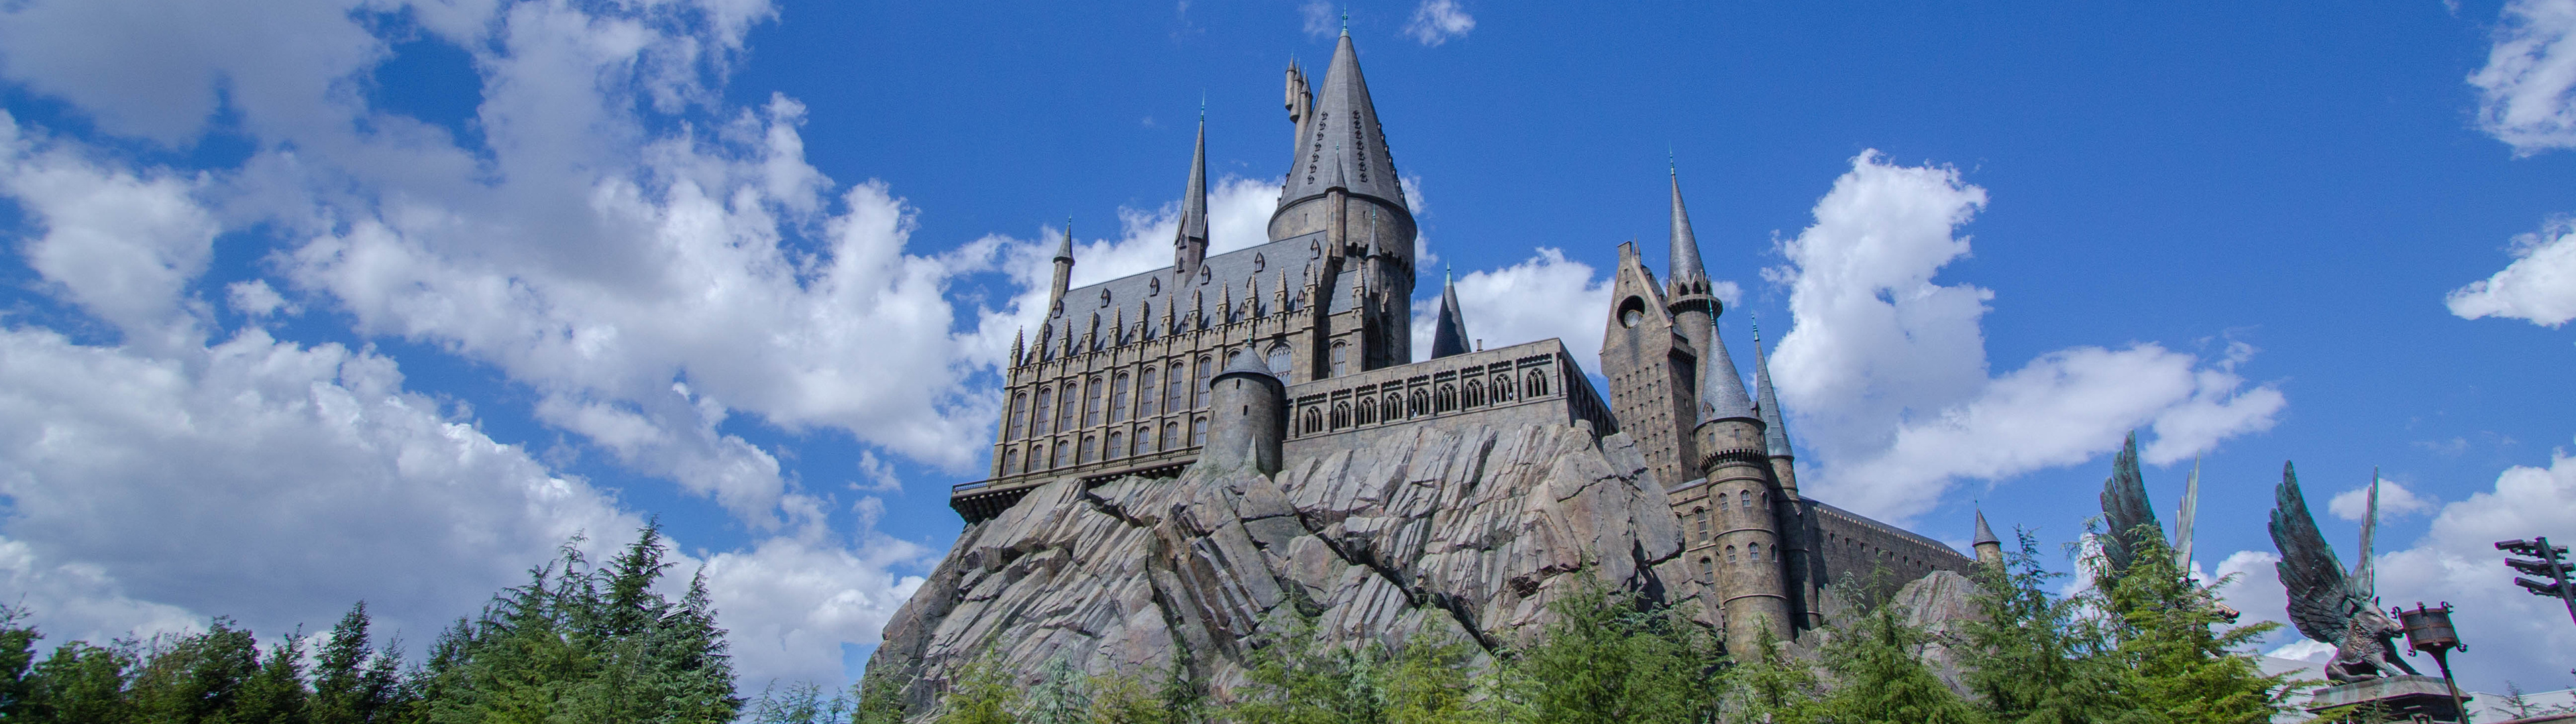 Hogwarts Castle, Request Hogwarts wallpaper, Rmultiwall, 3840x1080 Dual Screen Desktop